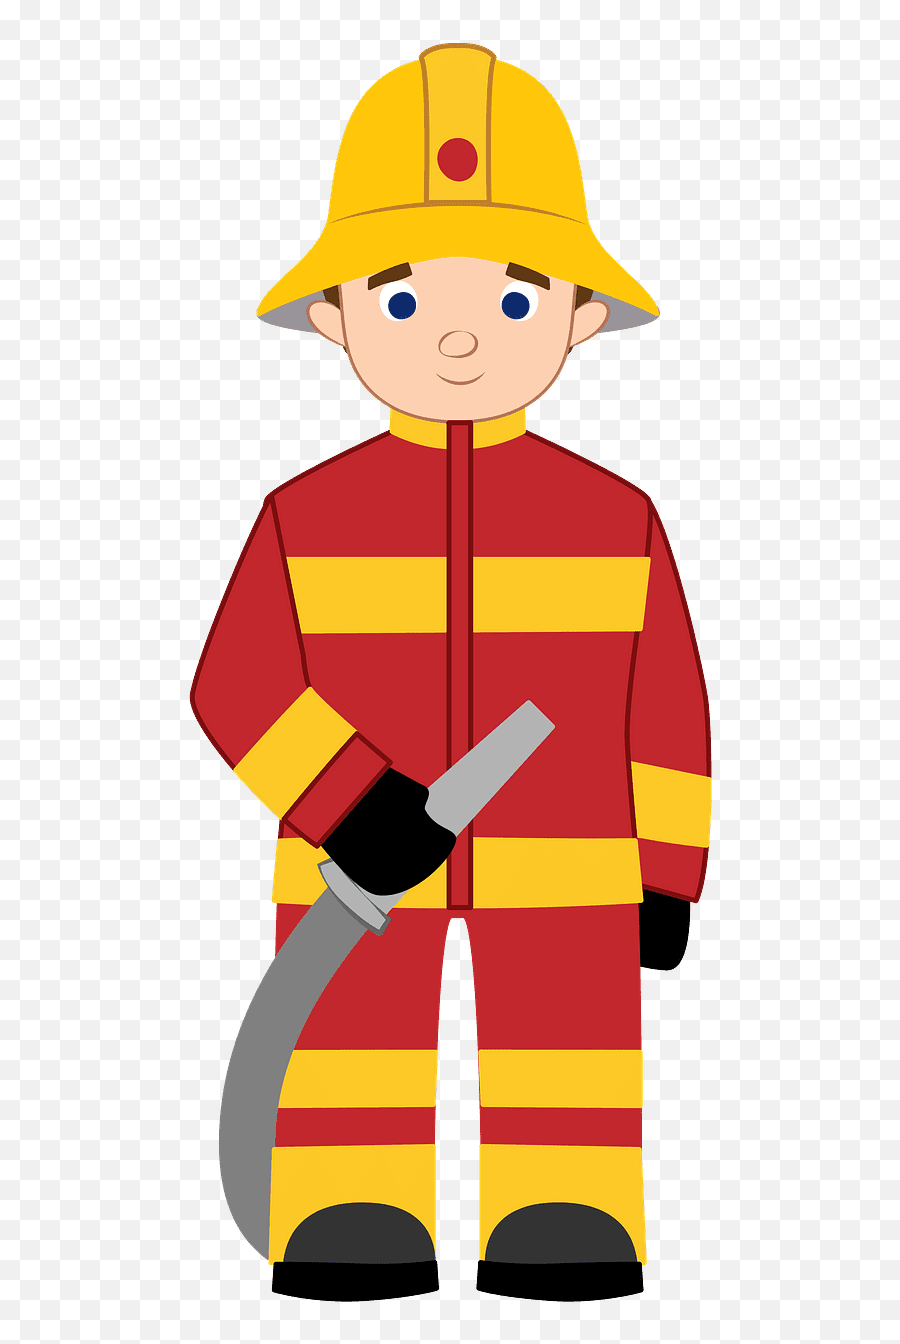 Firefighter Helmet Clipart Images - Clipart World Emoji,Fireman Hat Clipart